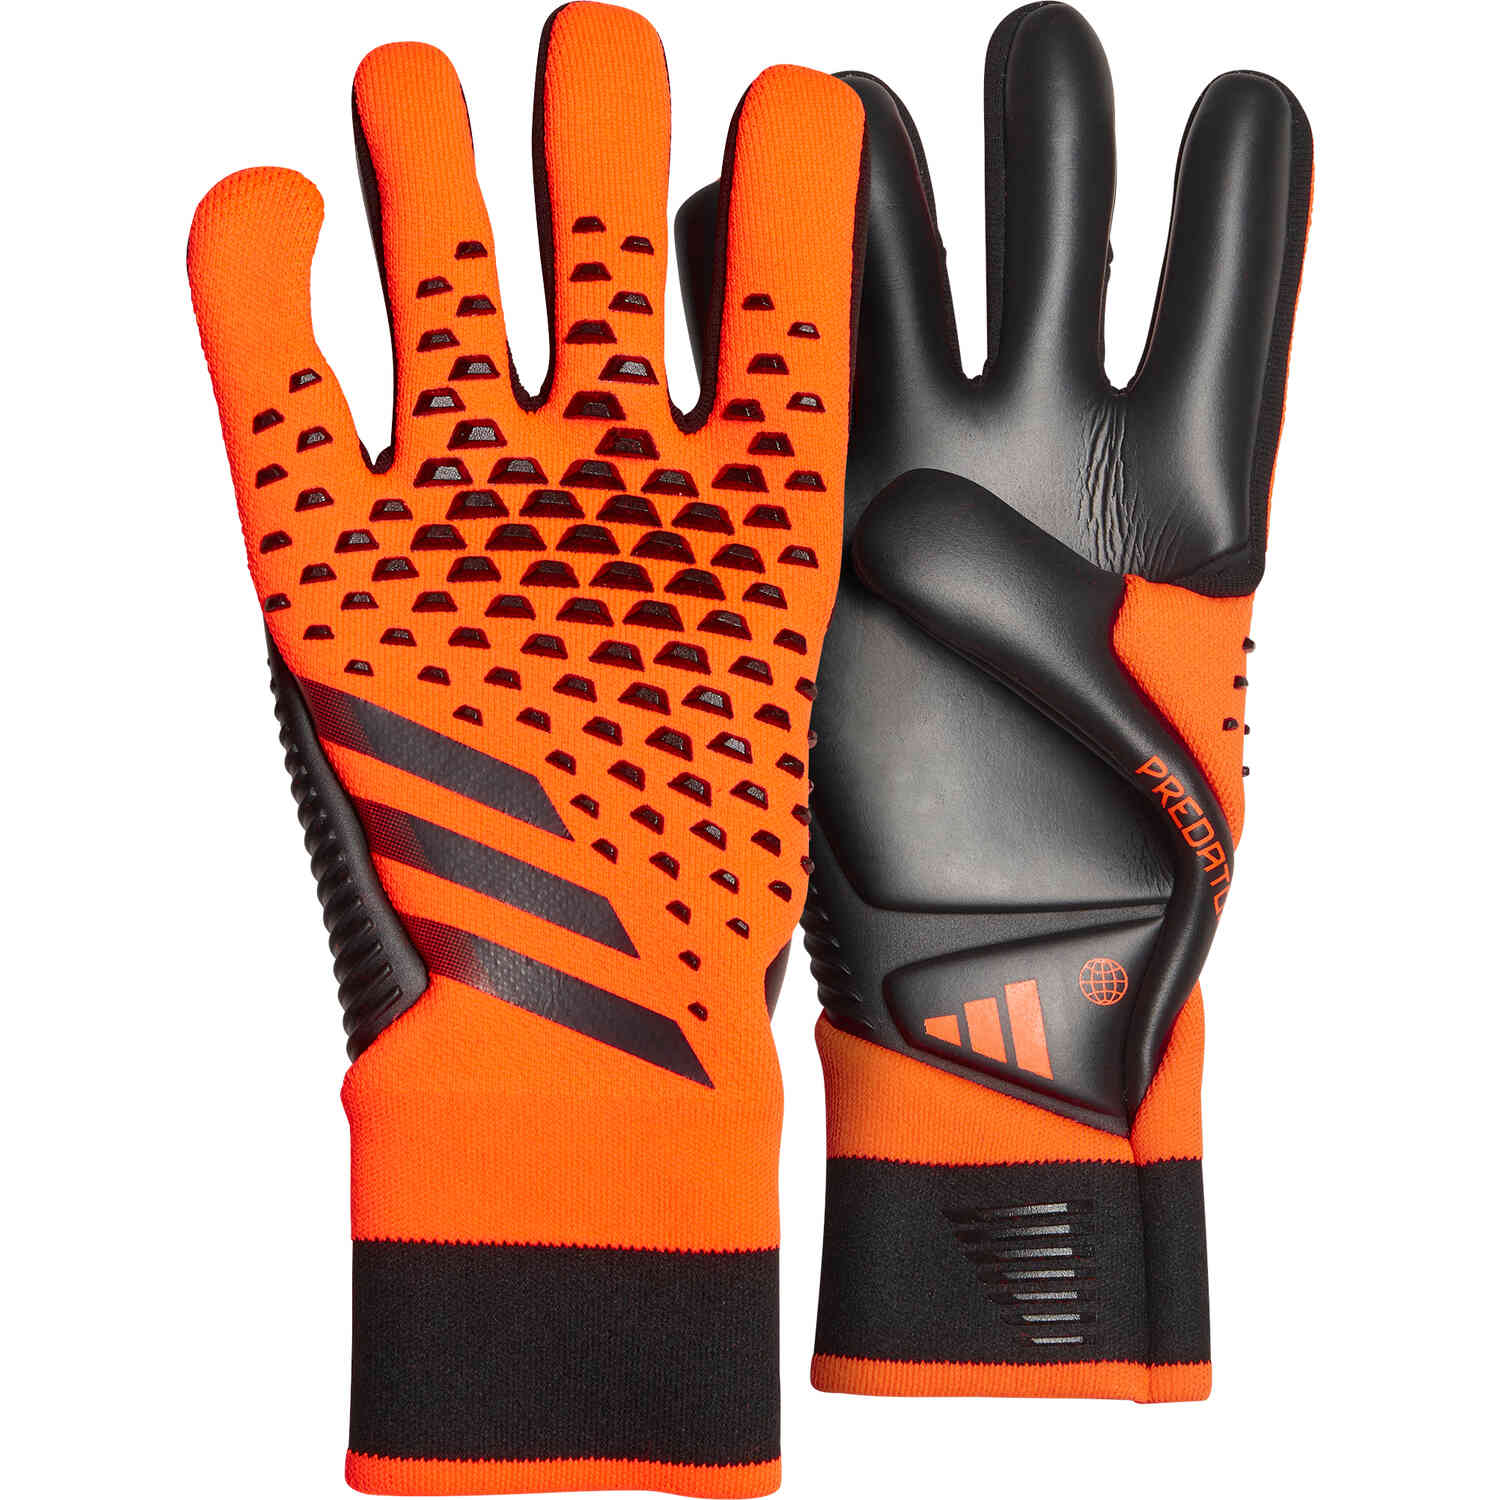 adidas Predator Pro Goalkeeper Gloves - Heatspawn Pack - SoccerPro